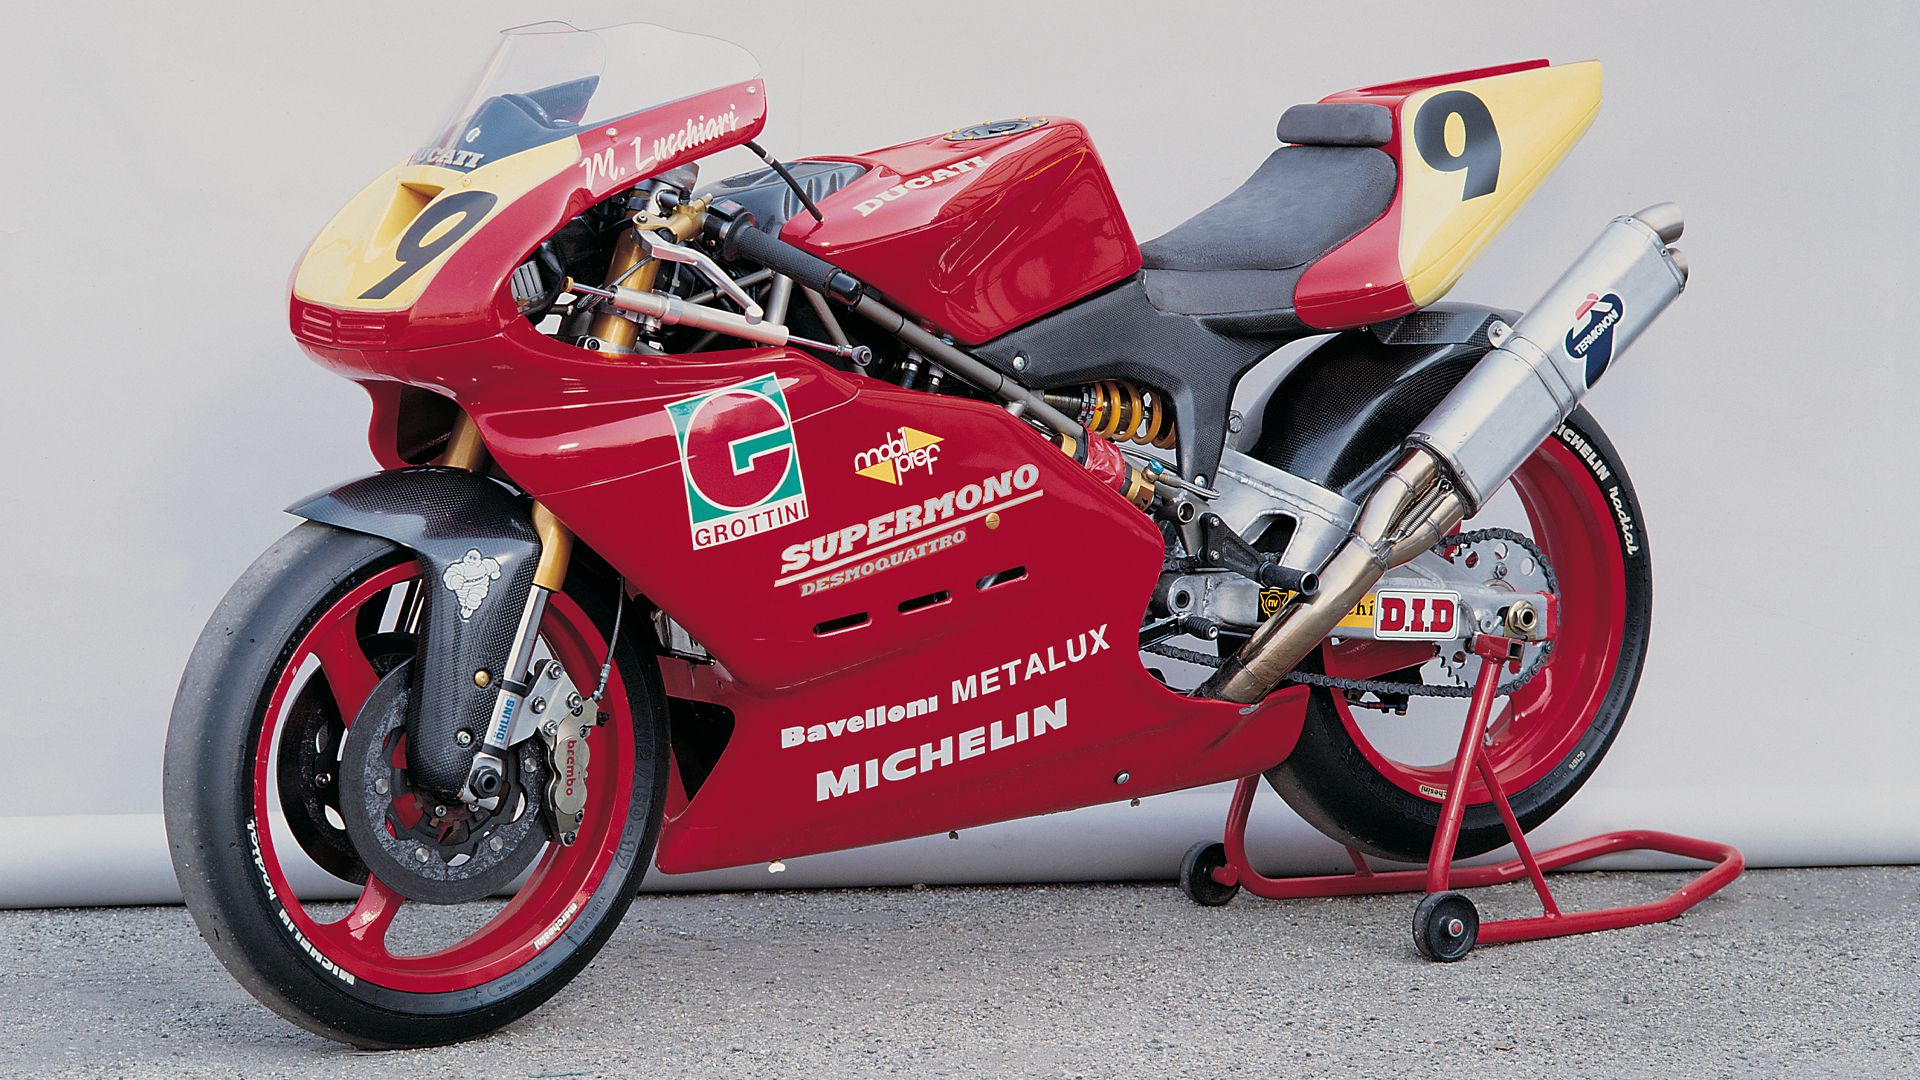 Ducati Supermono on a paddock stand